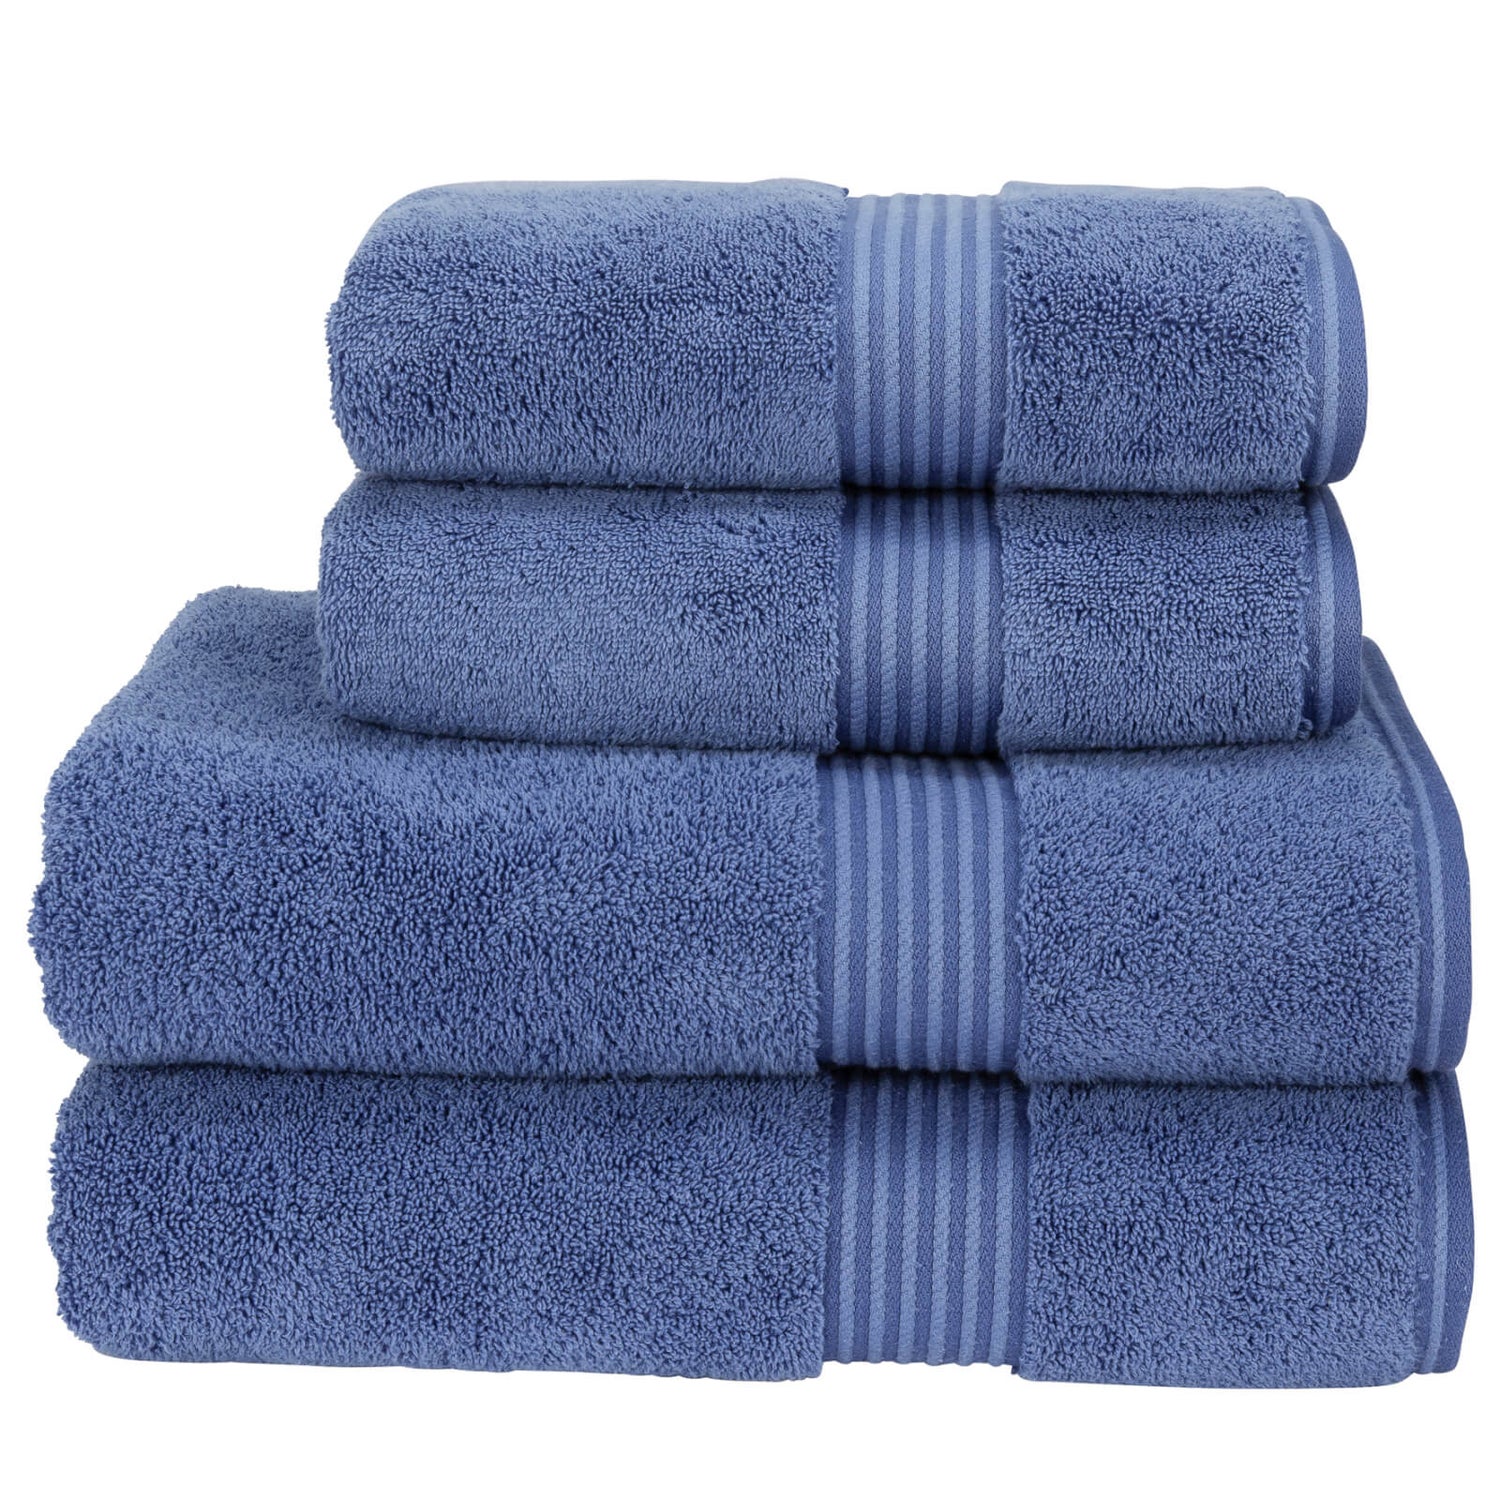 Christy Supreme Hygro Towels - Deep Sea Blue - Bath Towel (Set of 2)